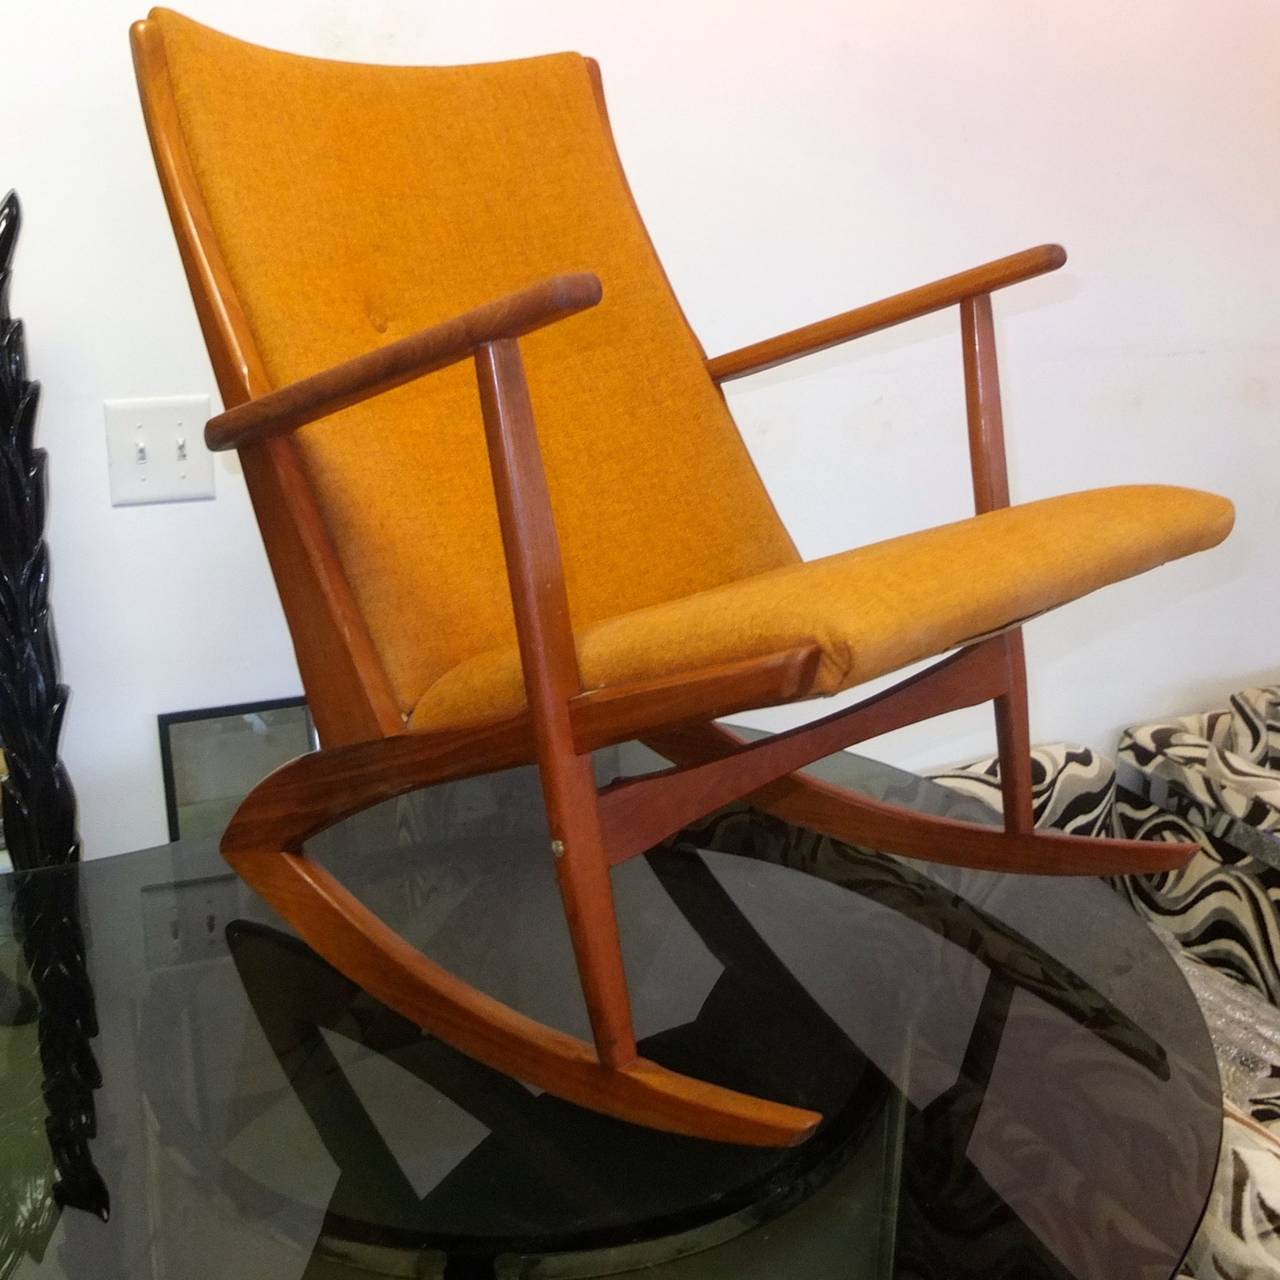 Danish teak rocking chair designer by Holgar Georg Jensen* part of the Kubis collection for Tønder Møbelværk Denmark, 1958.  Original upholstery very clean. Stylish boomerang design.

Arm rest height ~23 inches.

*no relation to the